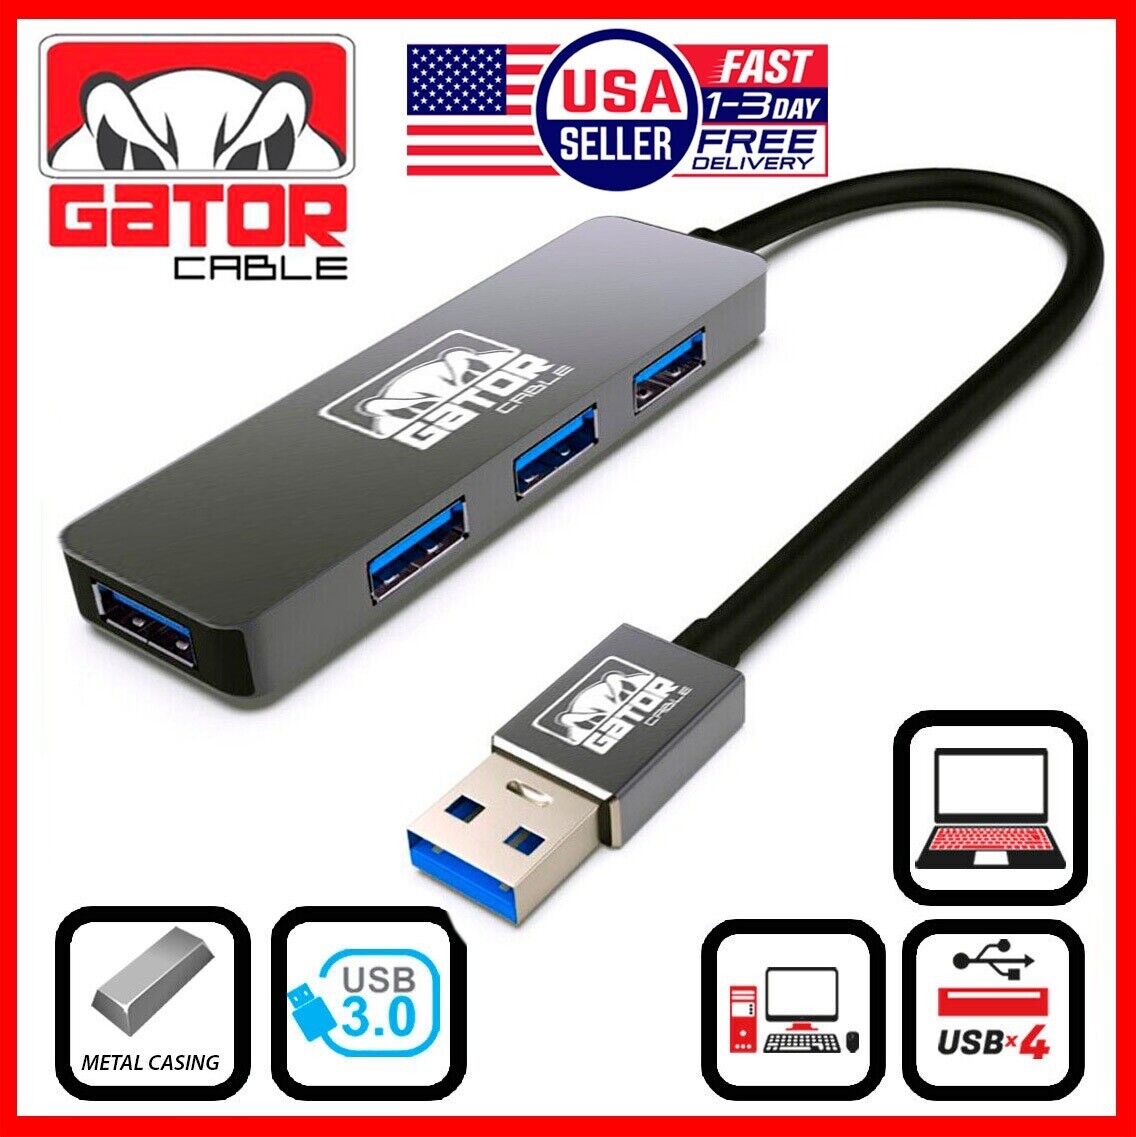 USB 3.0 Hub 4 Port Adapter Charger Data Sync Super Speed PC Mac Laptop Desktop